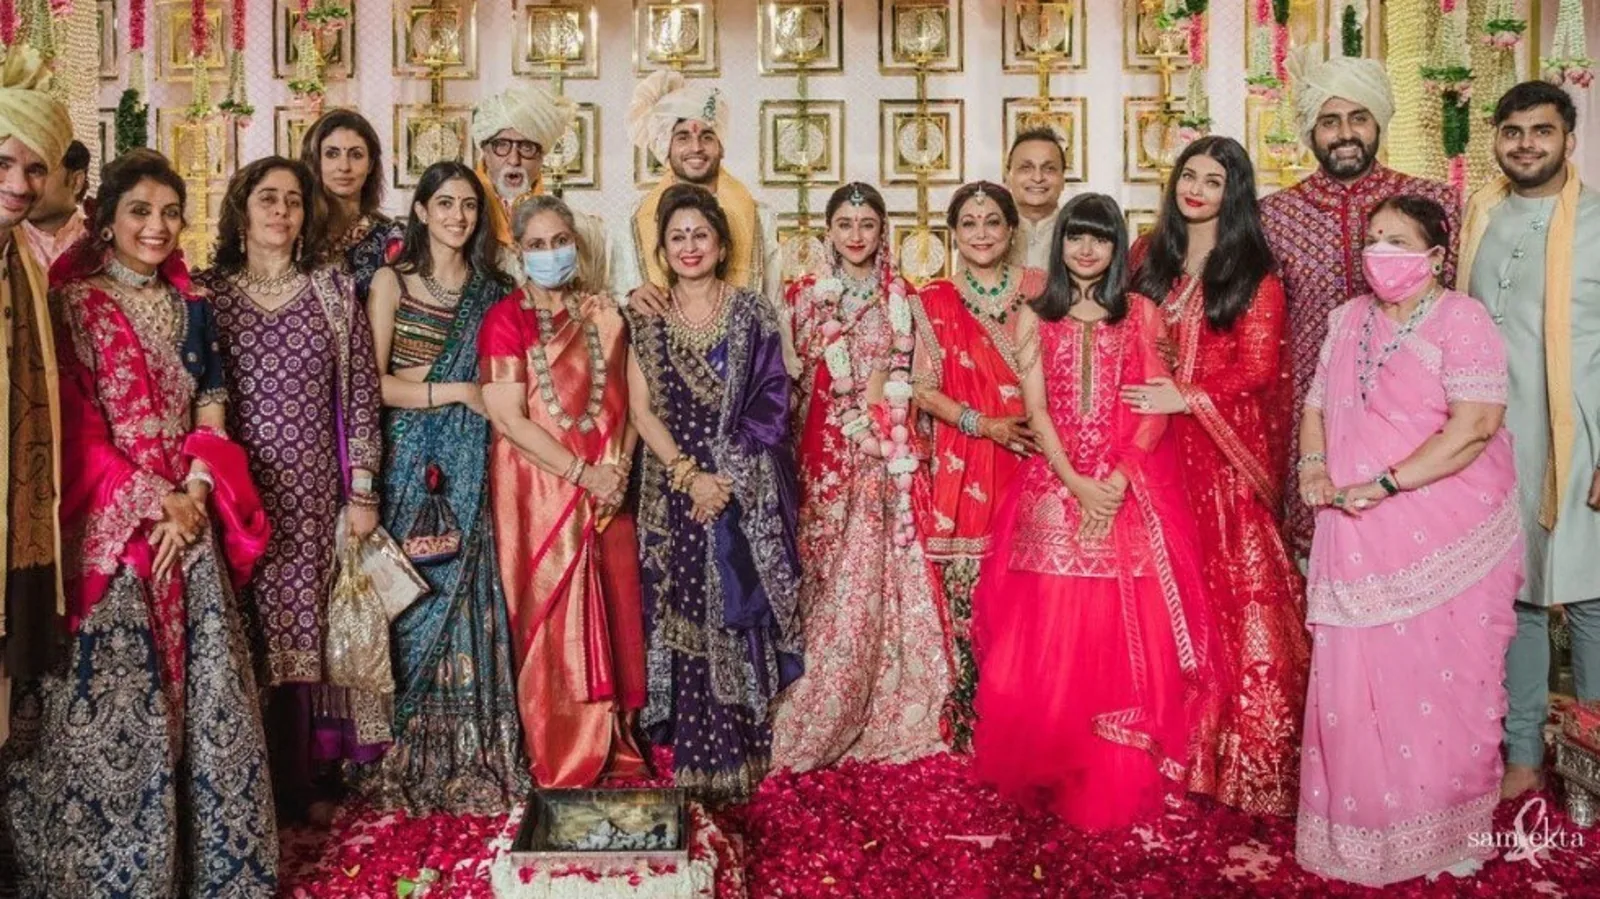 Amitabh Bachchan, Abhishek, Aishwarya Rai pose for Ambani-Bachchans group pic shared by Tina Ambani. See her post